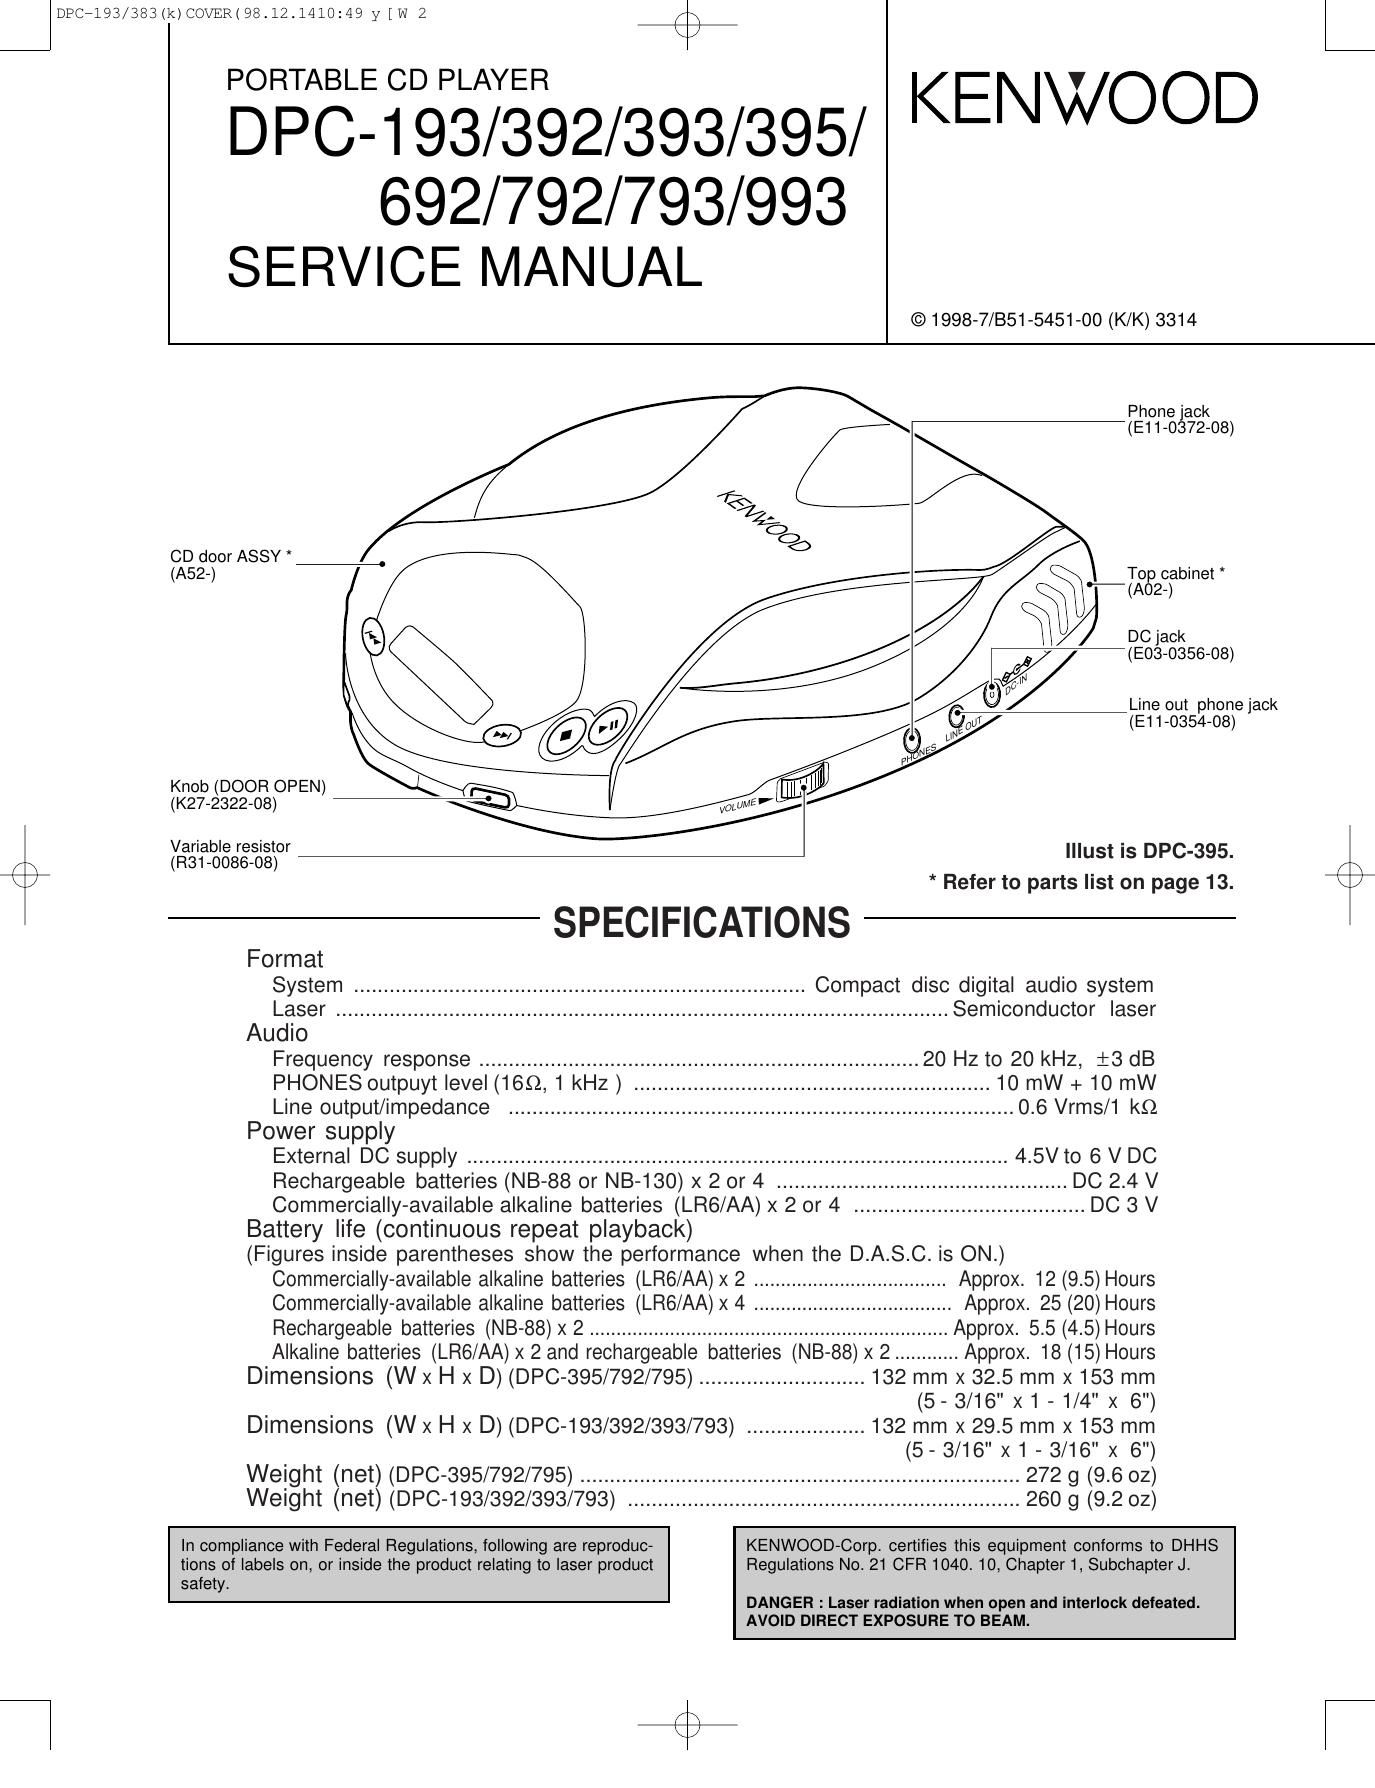 Kenwood DPC 395 Service Manual